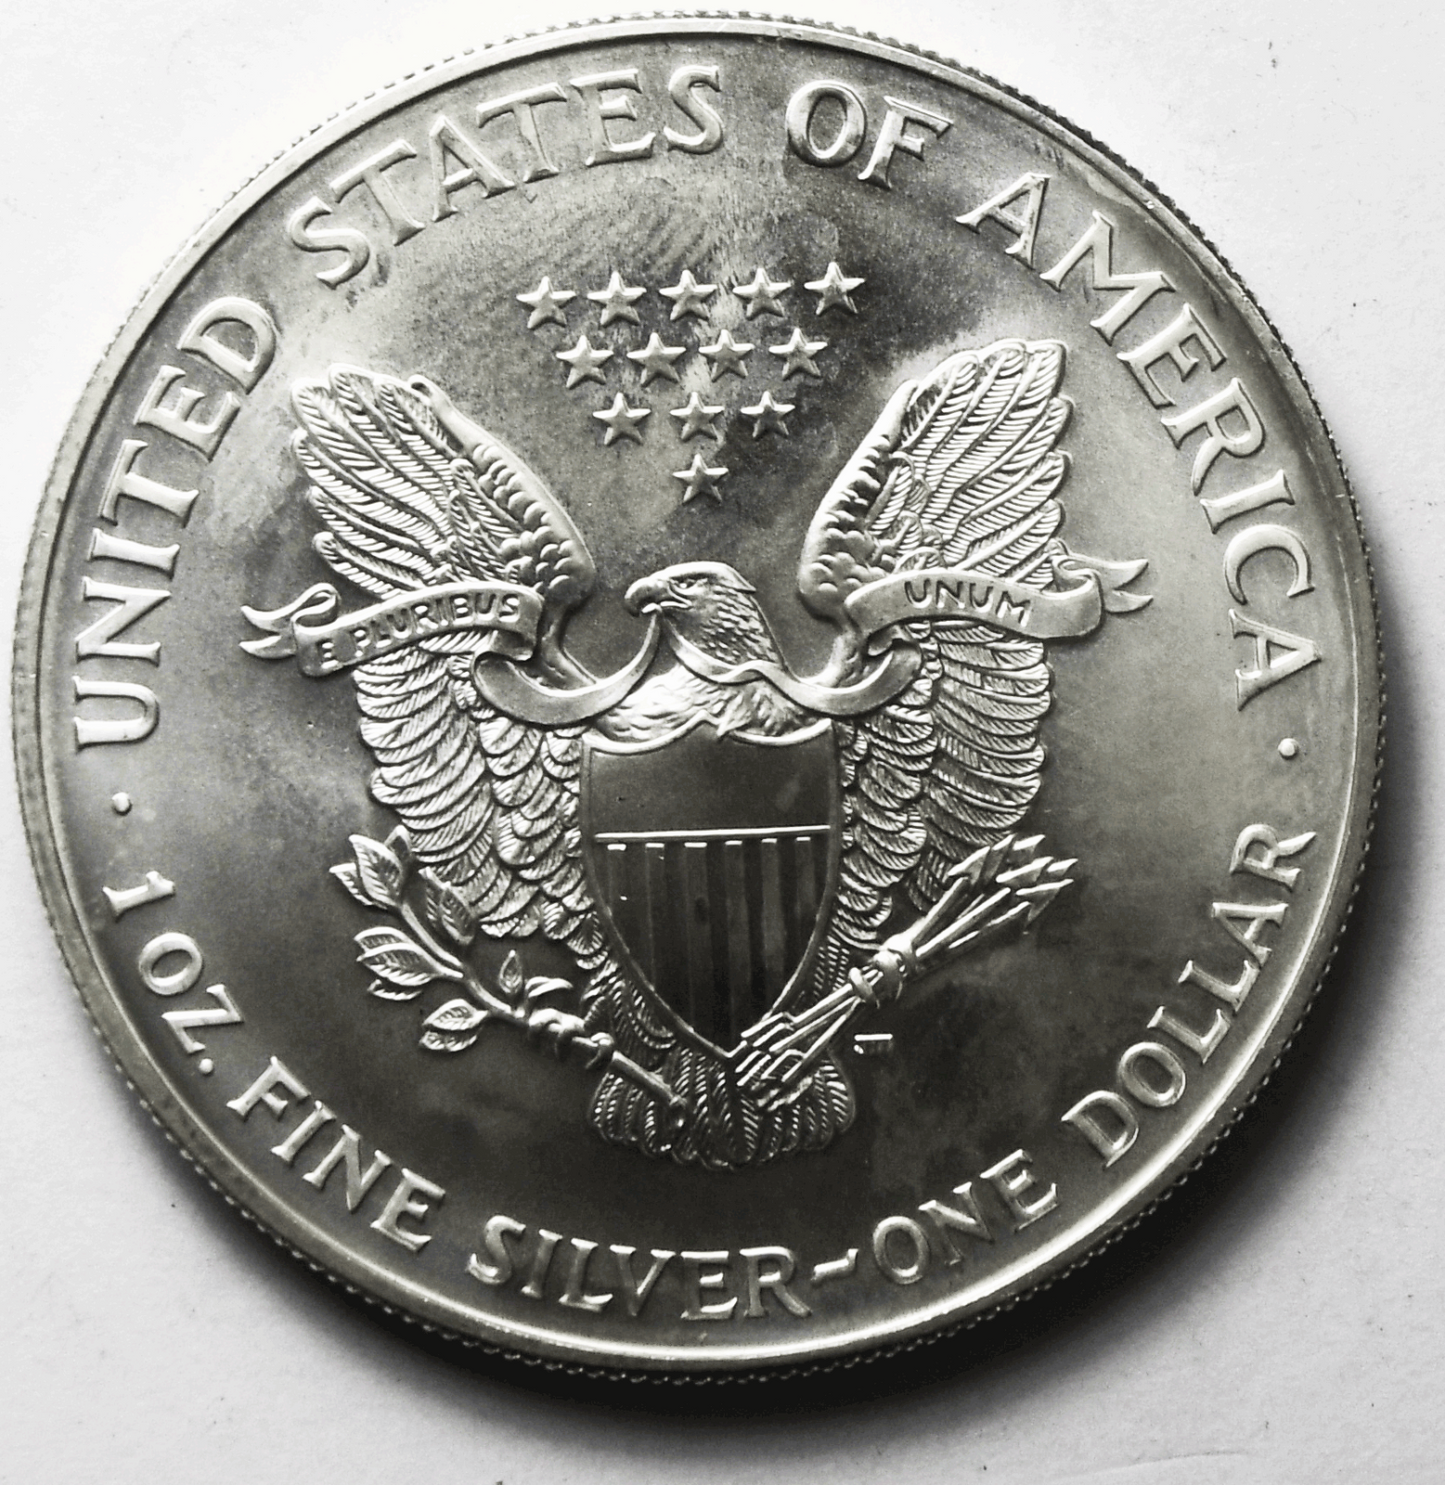 1996 $1 American Silver Eagle One Ounce Fine Coin Rare Year